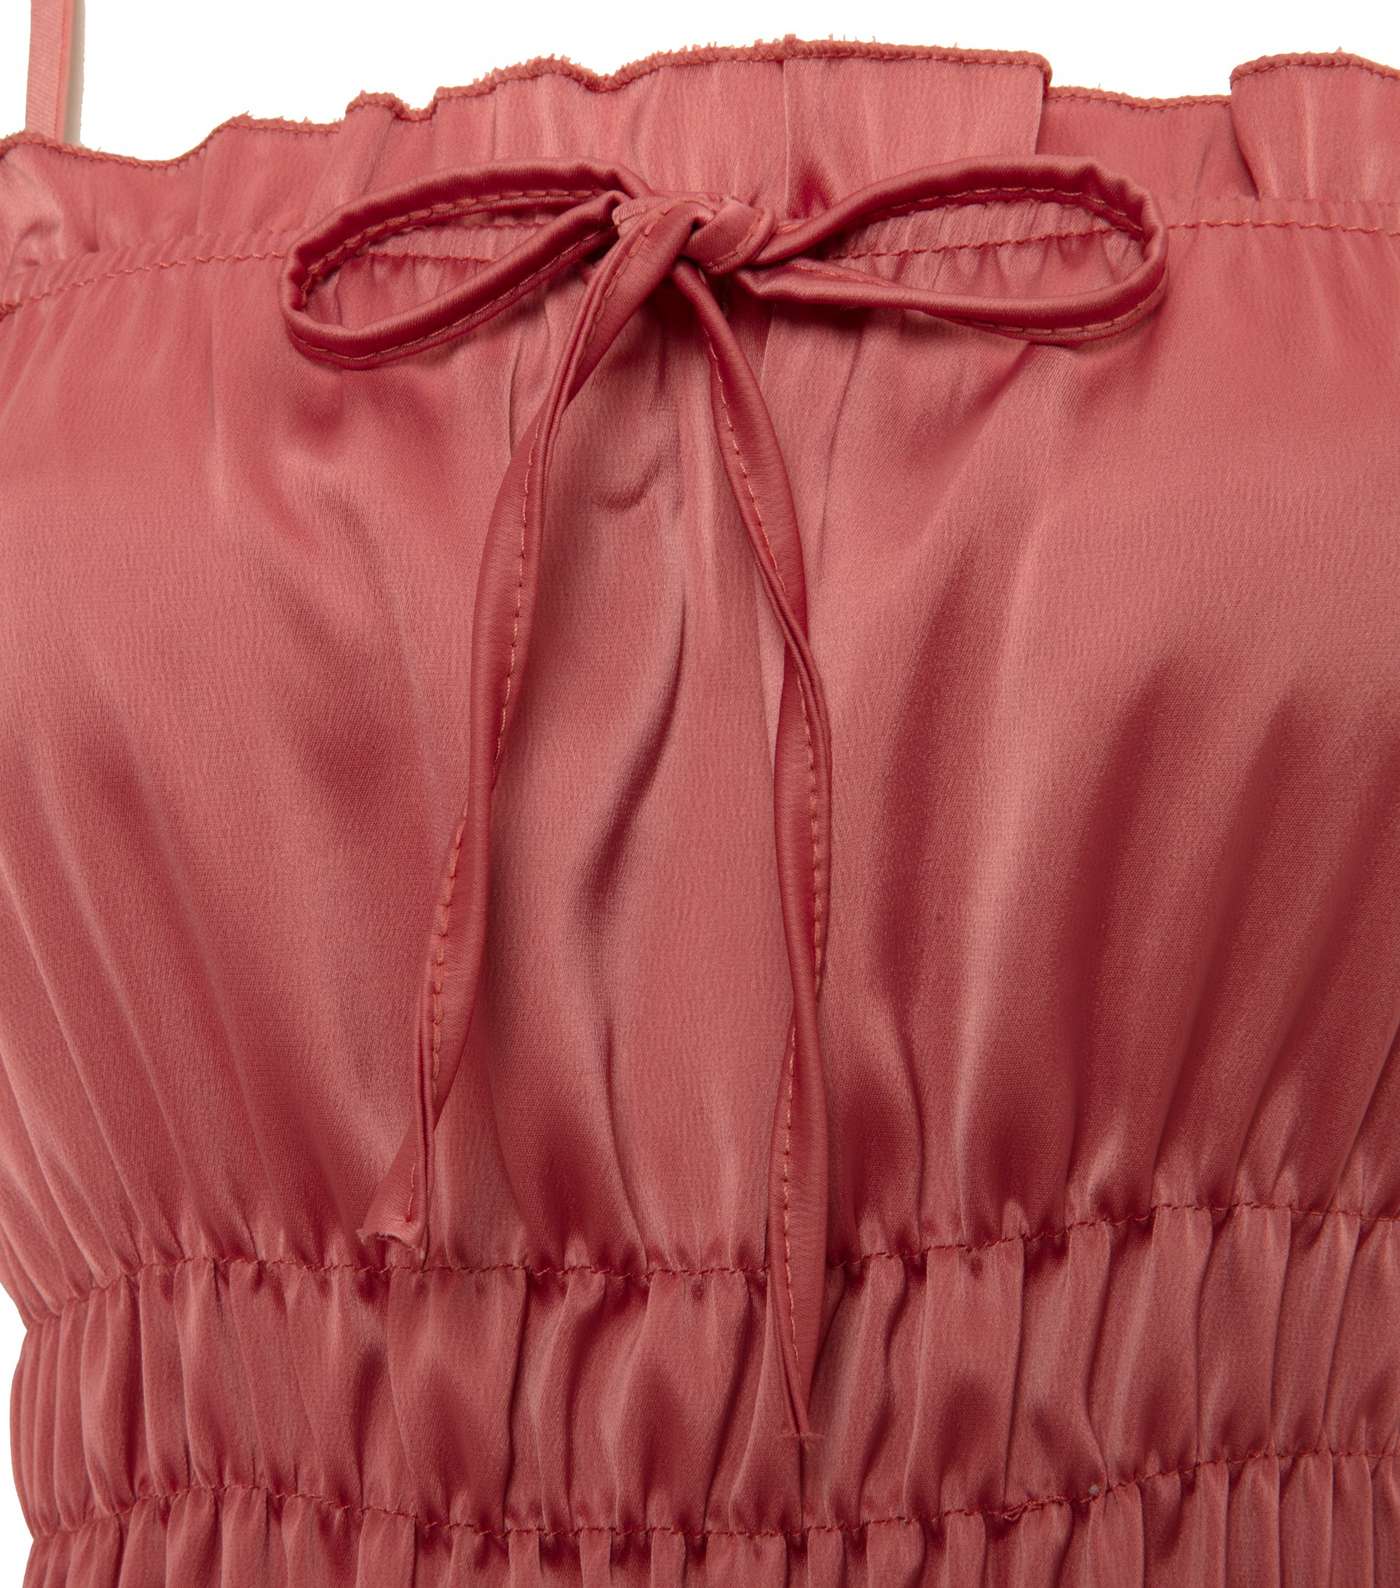 Cameo Rose Coral Satin Strappy Mini Dress Image 3